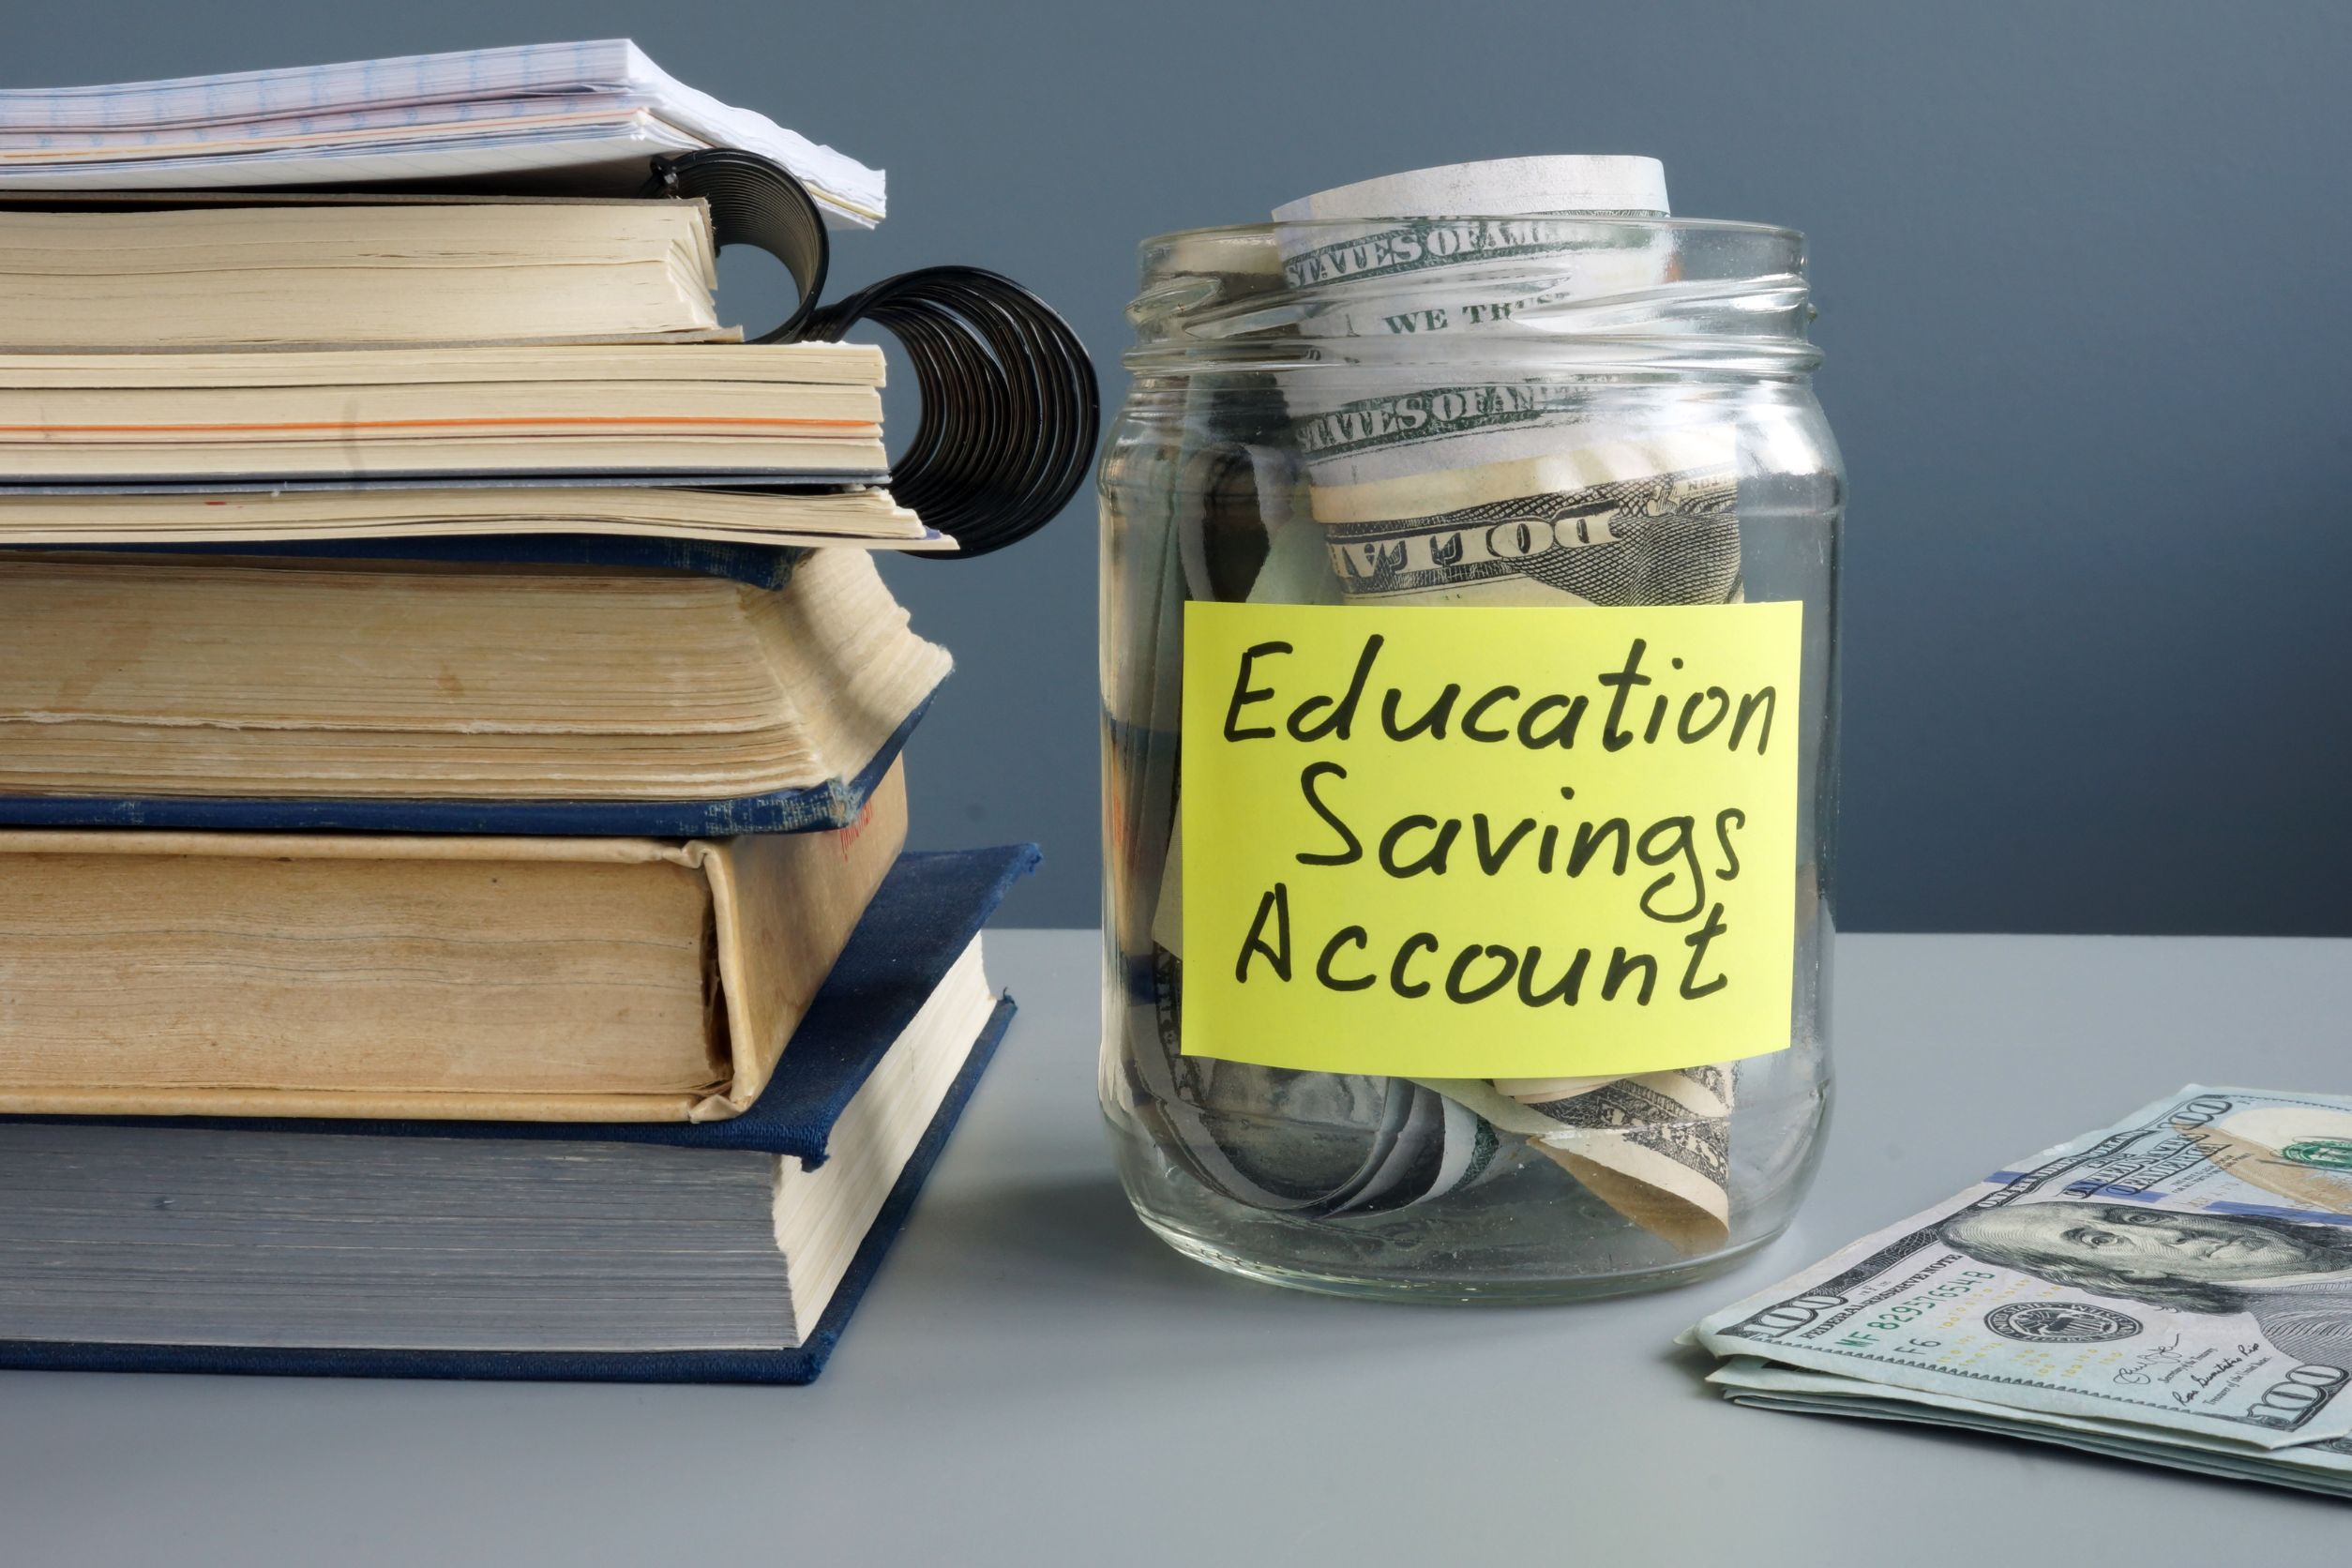 Tap into Education Savings Accounts